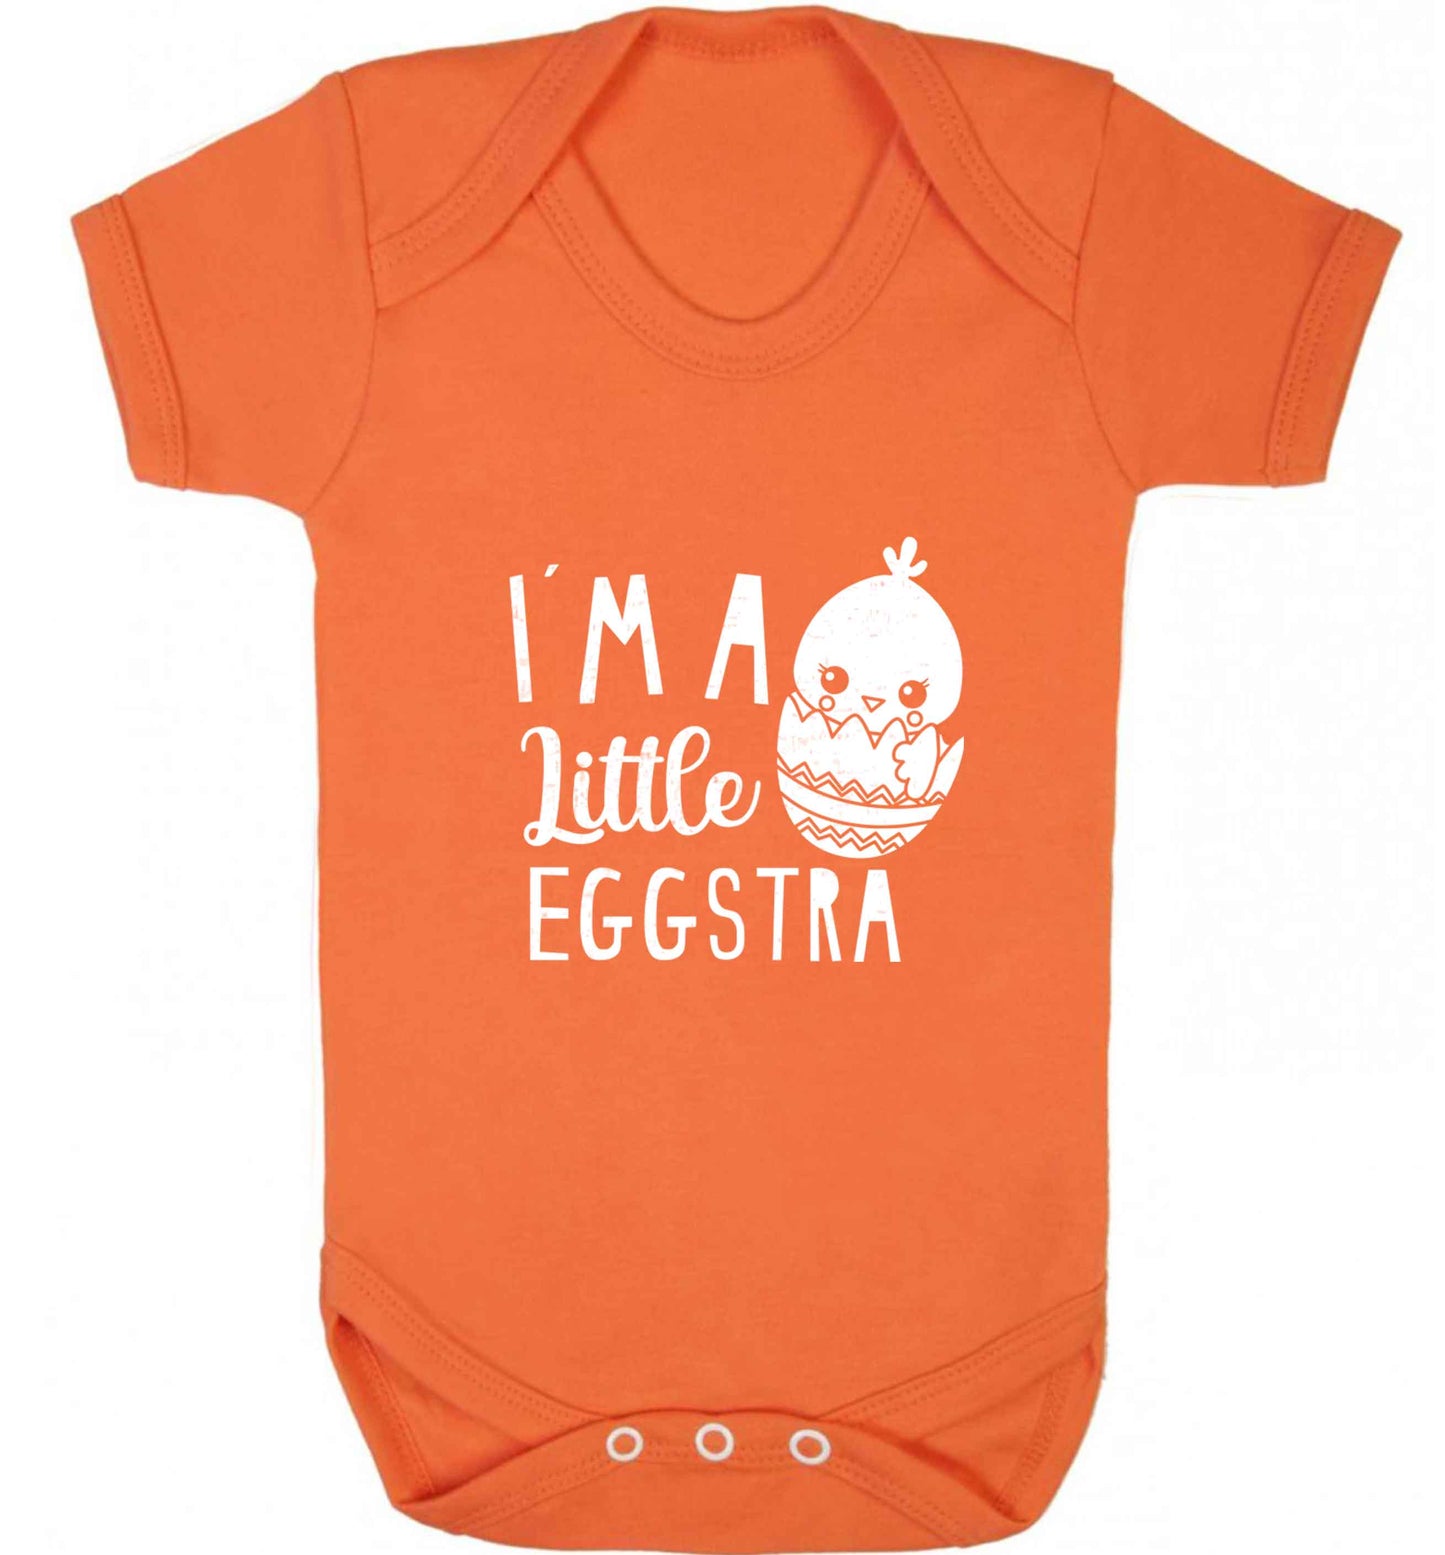 I'm a little eggstra baby vest orange 18-24 months